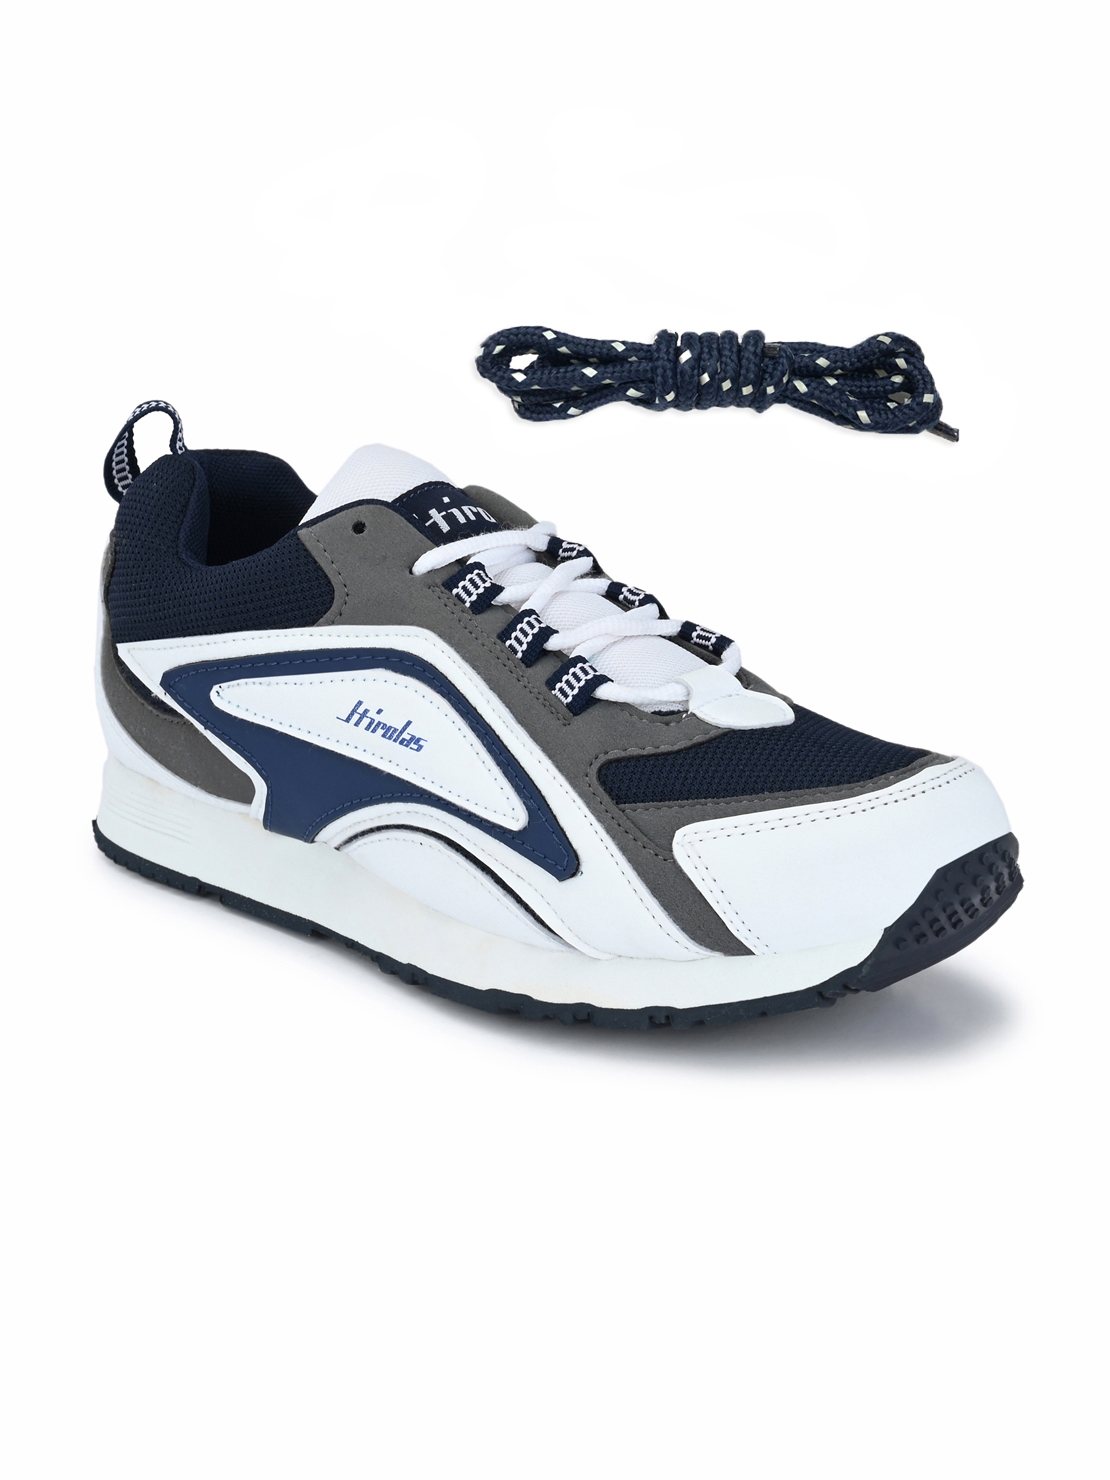 Hirolas | Hirolas Multi Sport Shock Absorbing Walking  Running Fitness Athletic Training Gym Fashion Sneaker Shoes - White/Blue 0